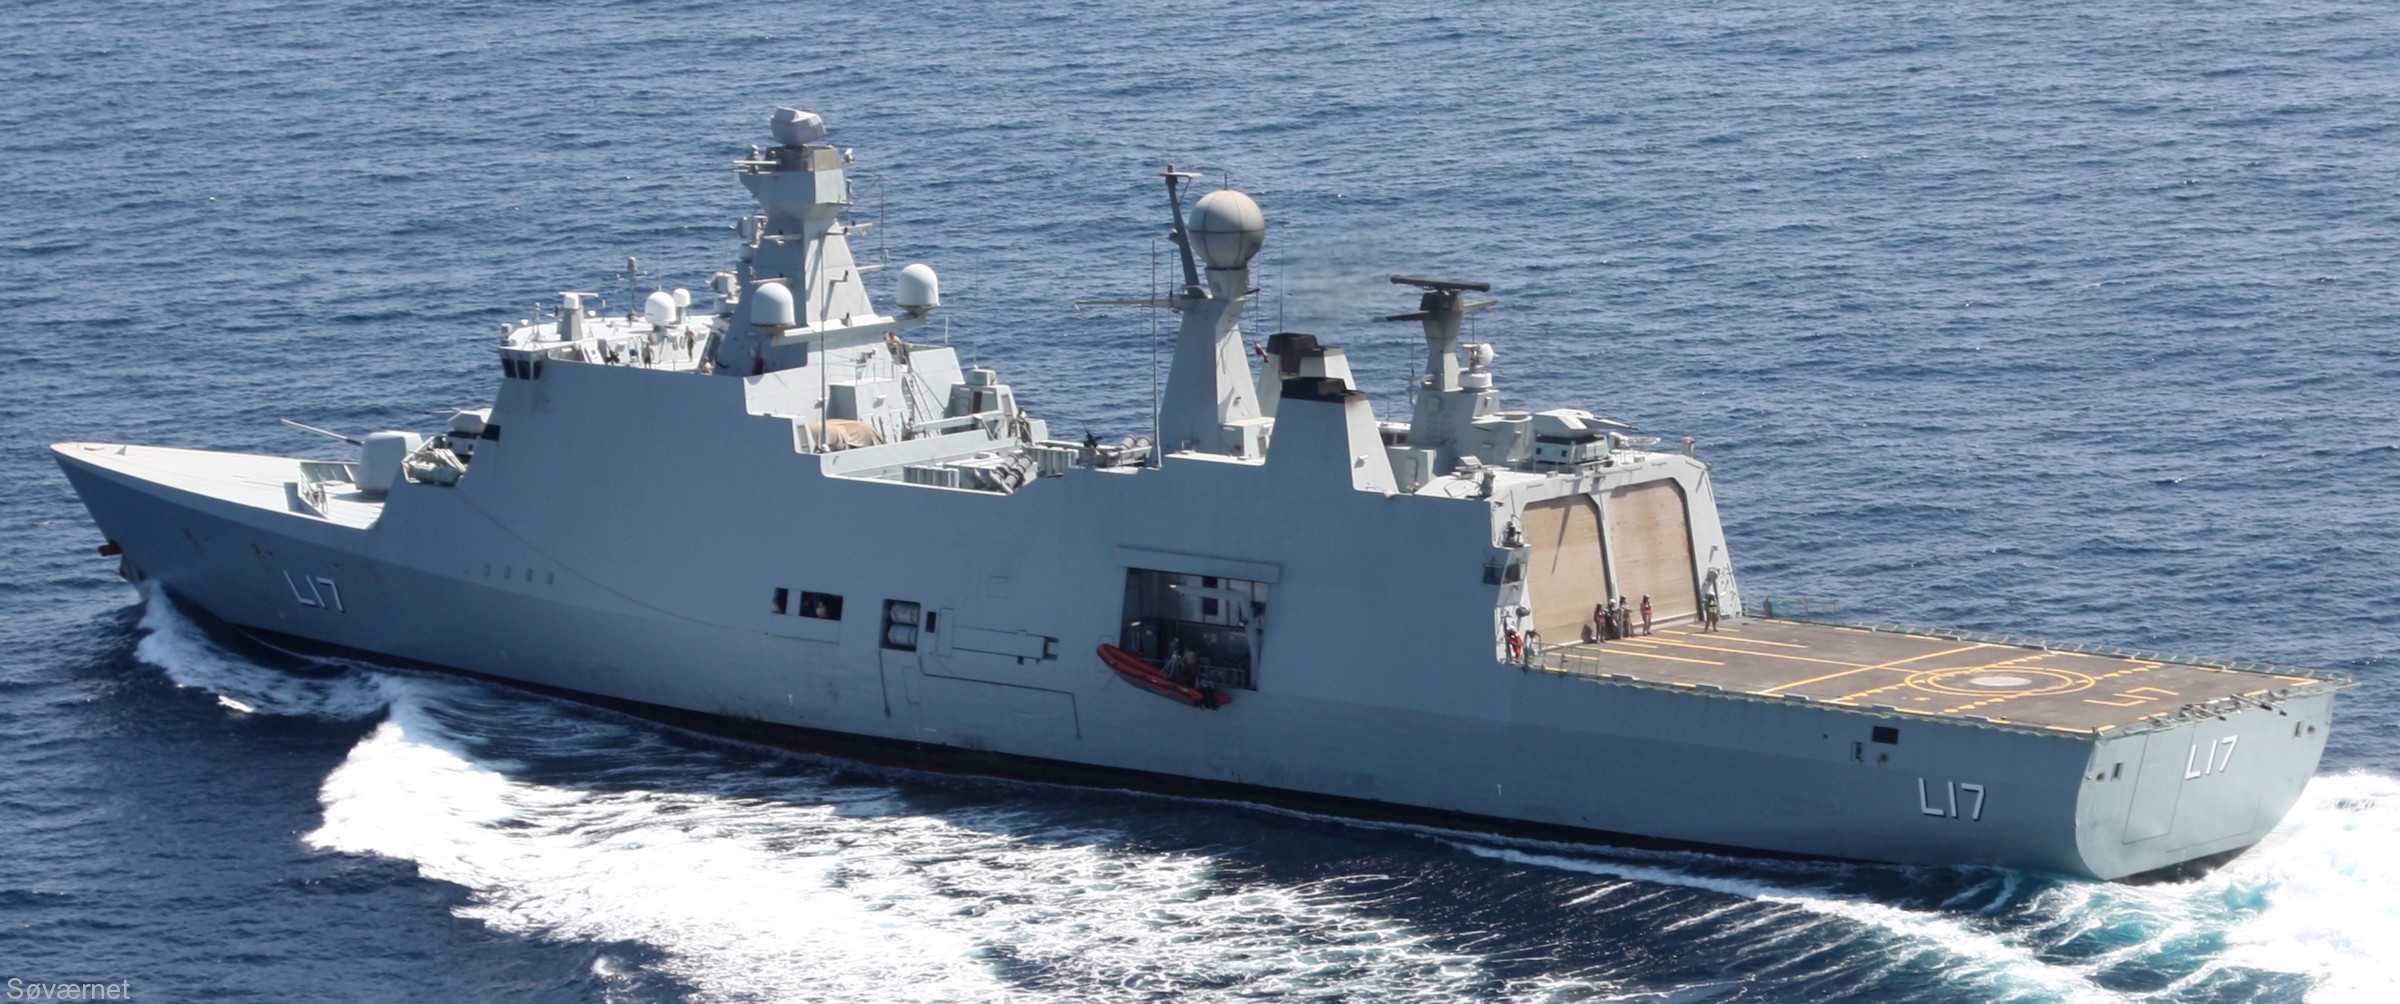 f-342 hdms esbern snare l-17 frigate command support ship royal danish navy 43